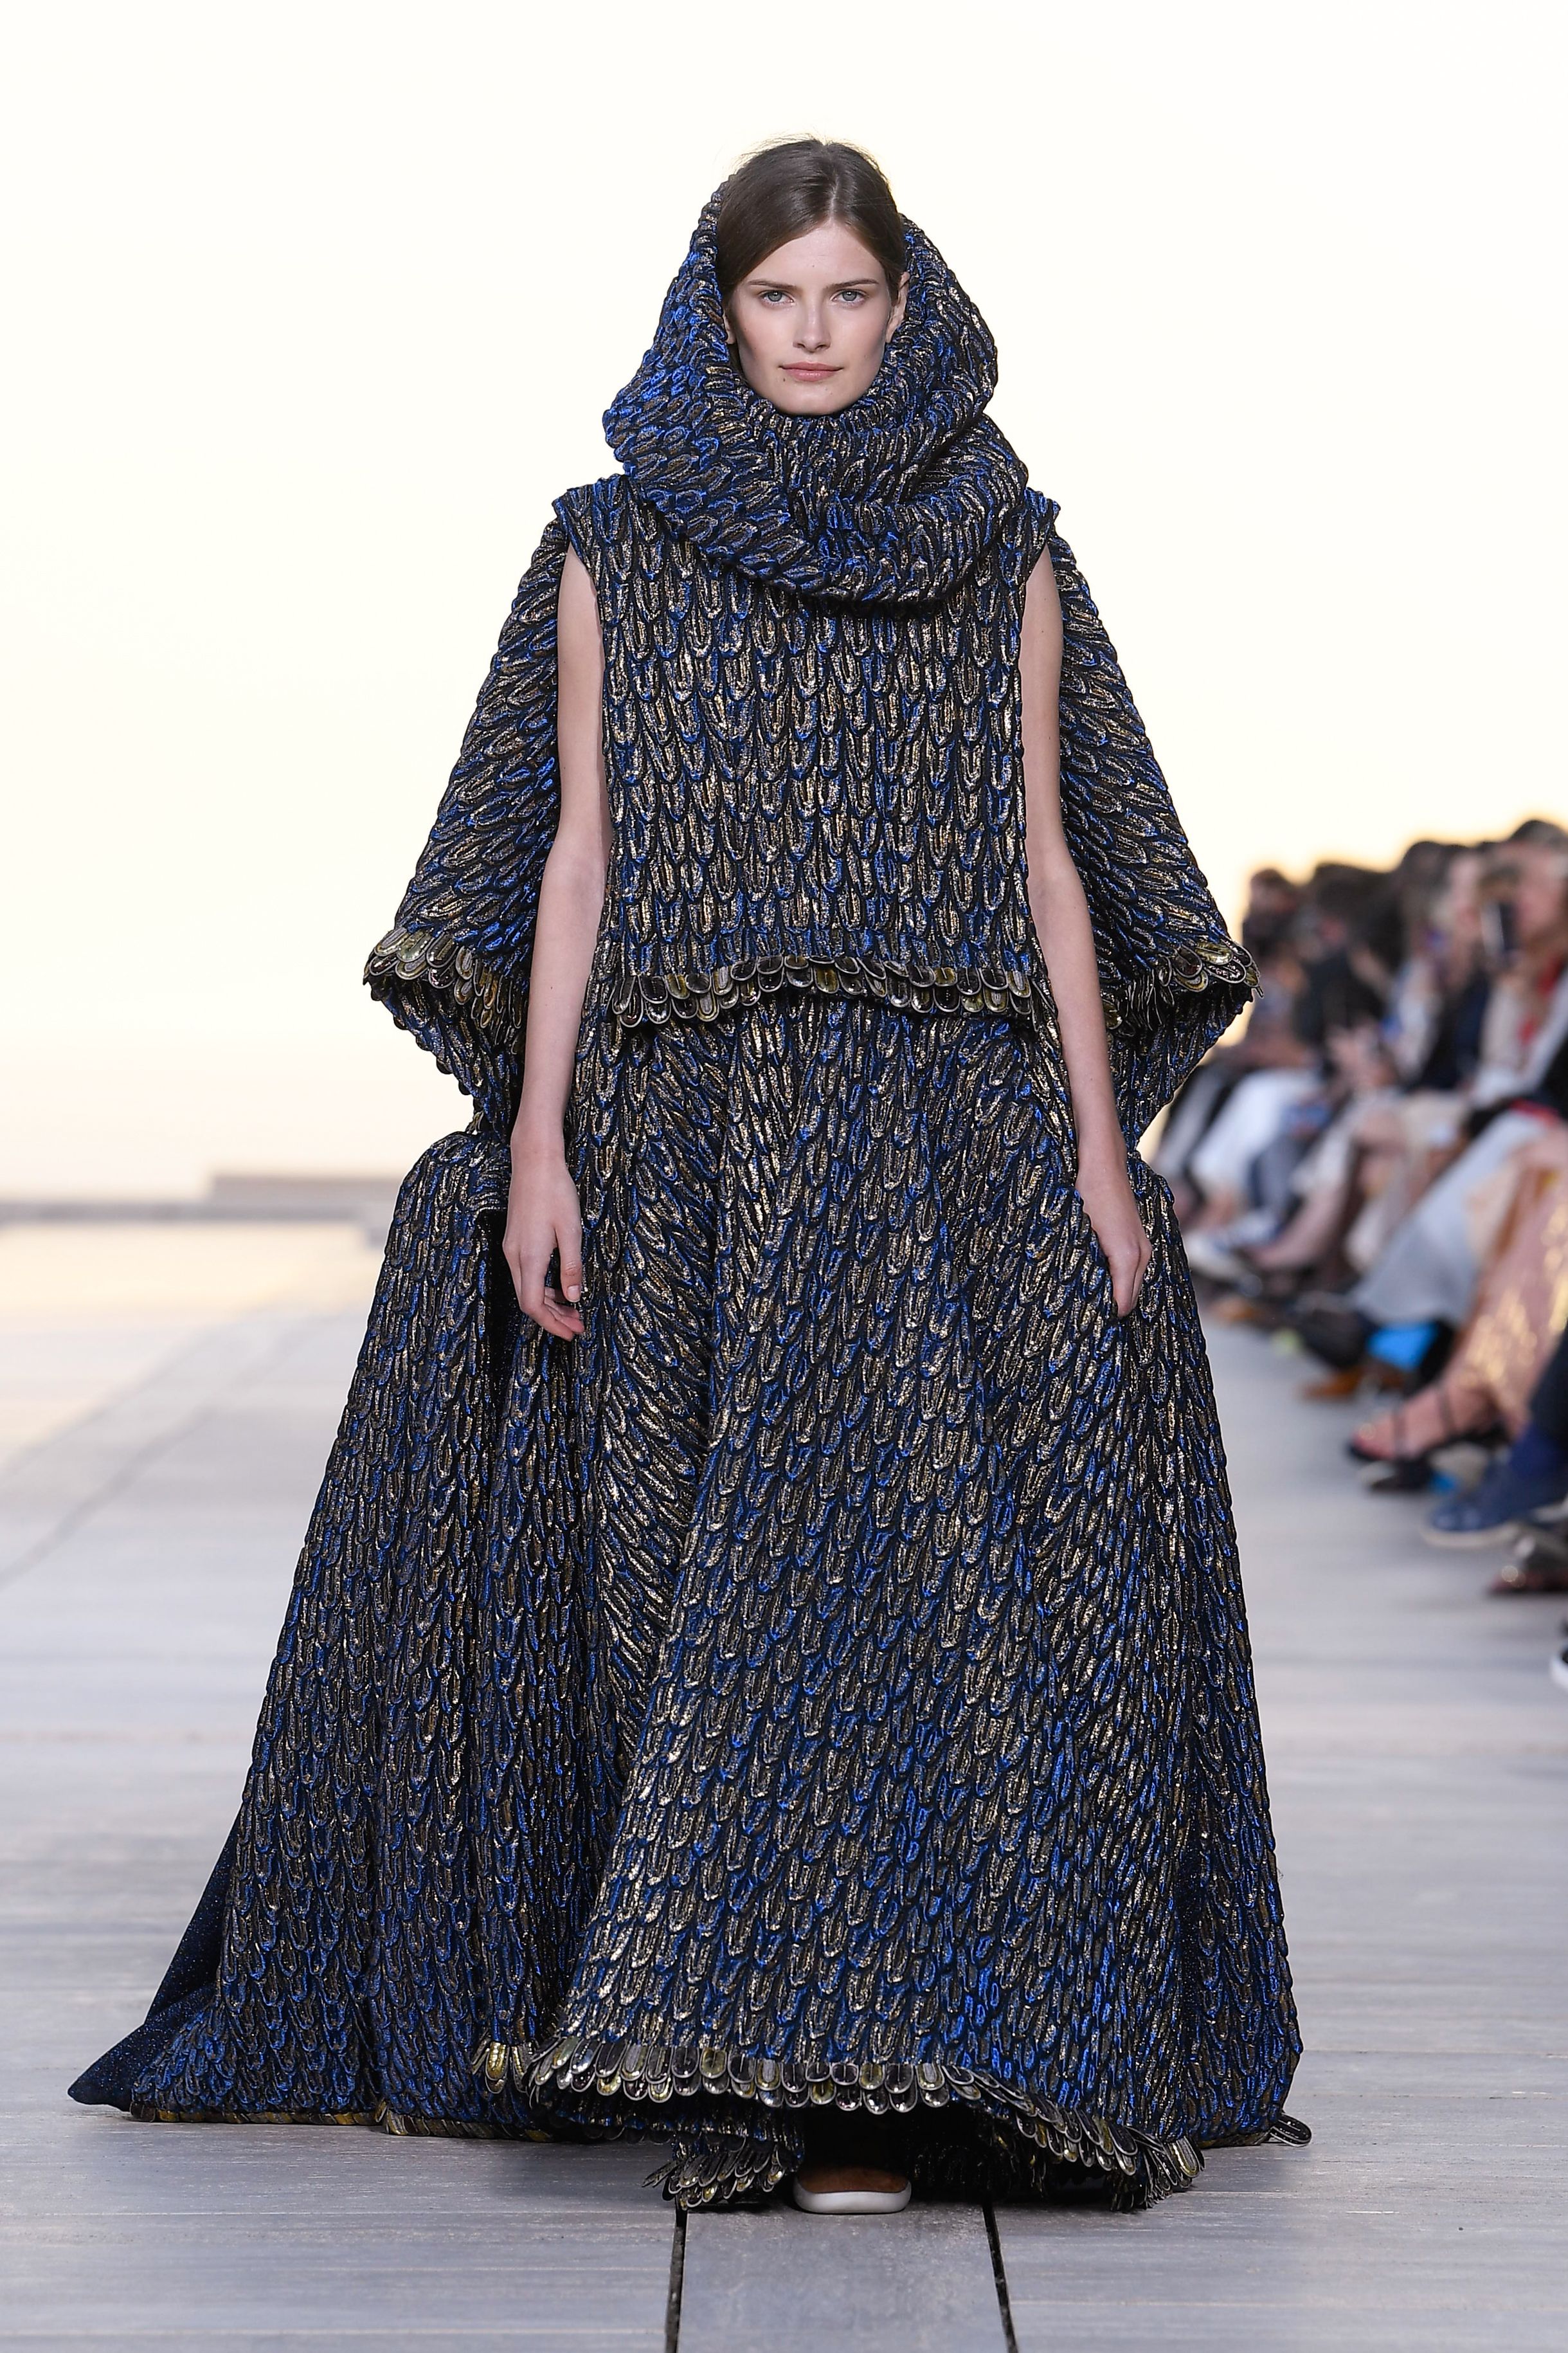 Le Voyage: GQ España Spotlights Louis Vuitton Fashions – The Fashionisto